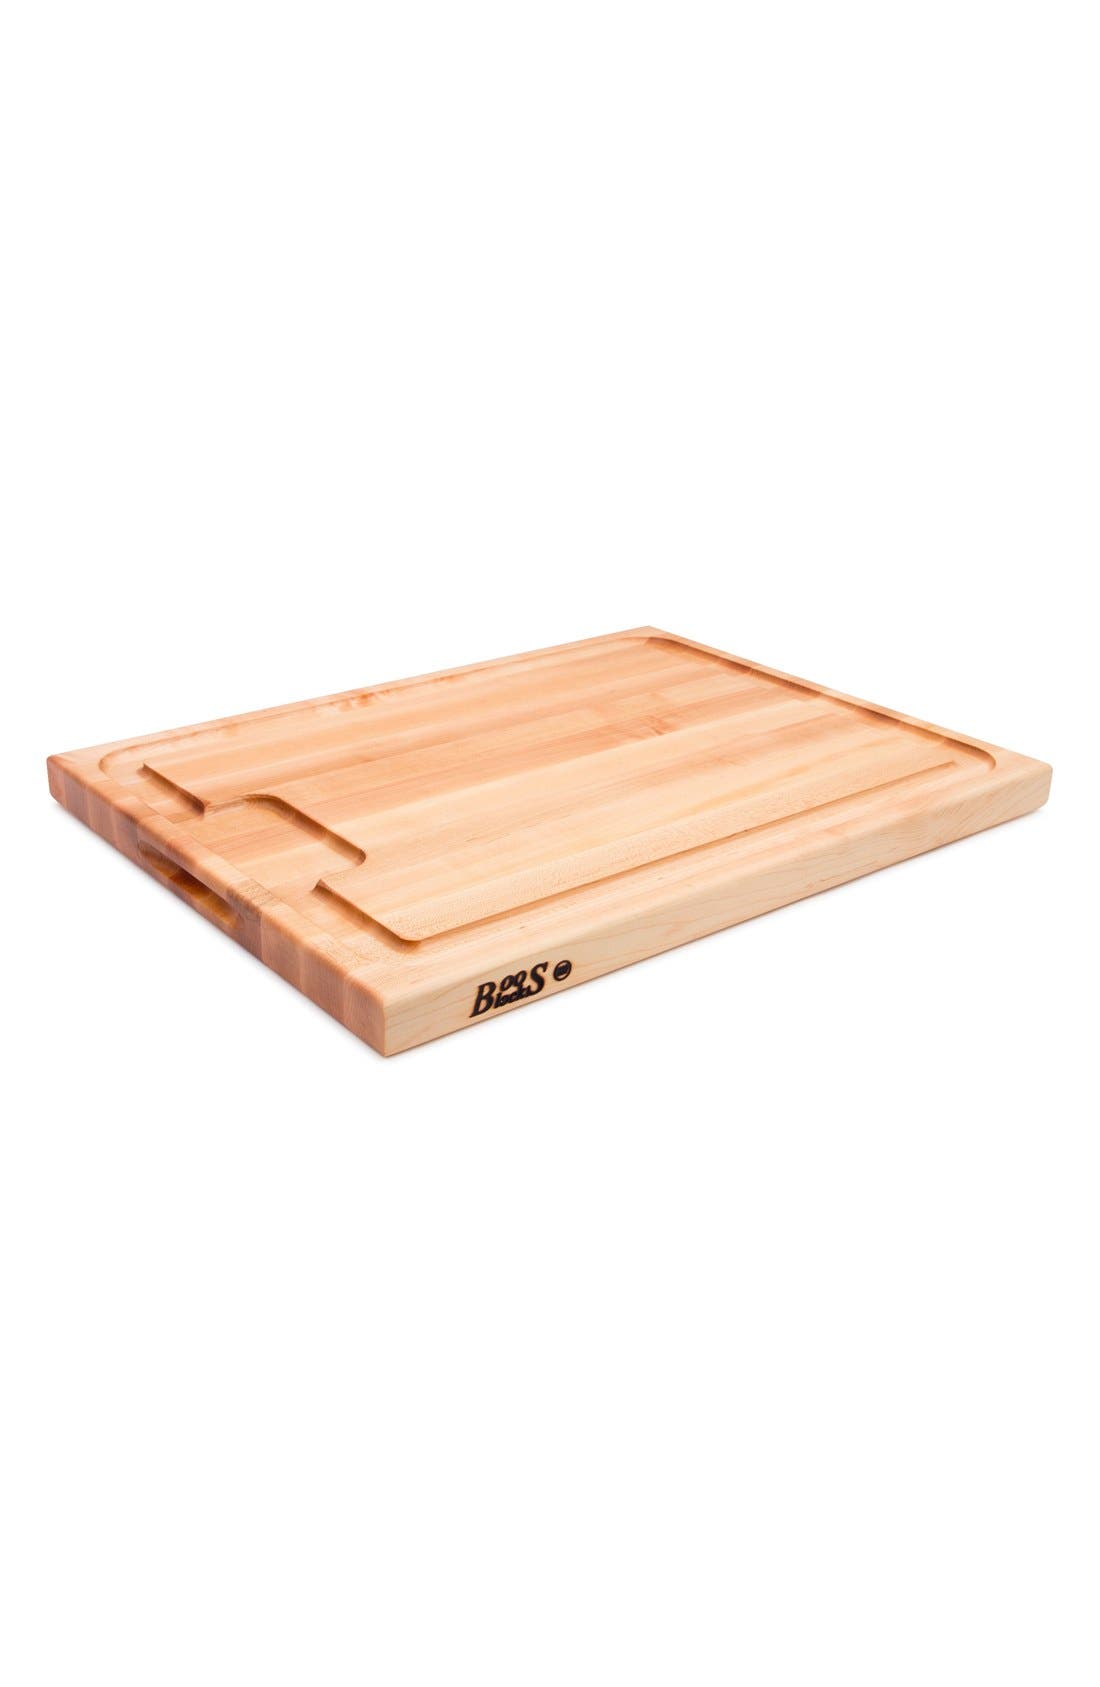 John Boos Au Jus Maple Wood Cutting Board with Juice Groove  18 x24 x1.5